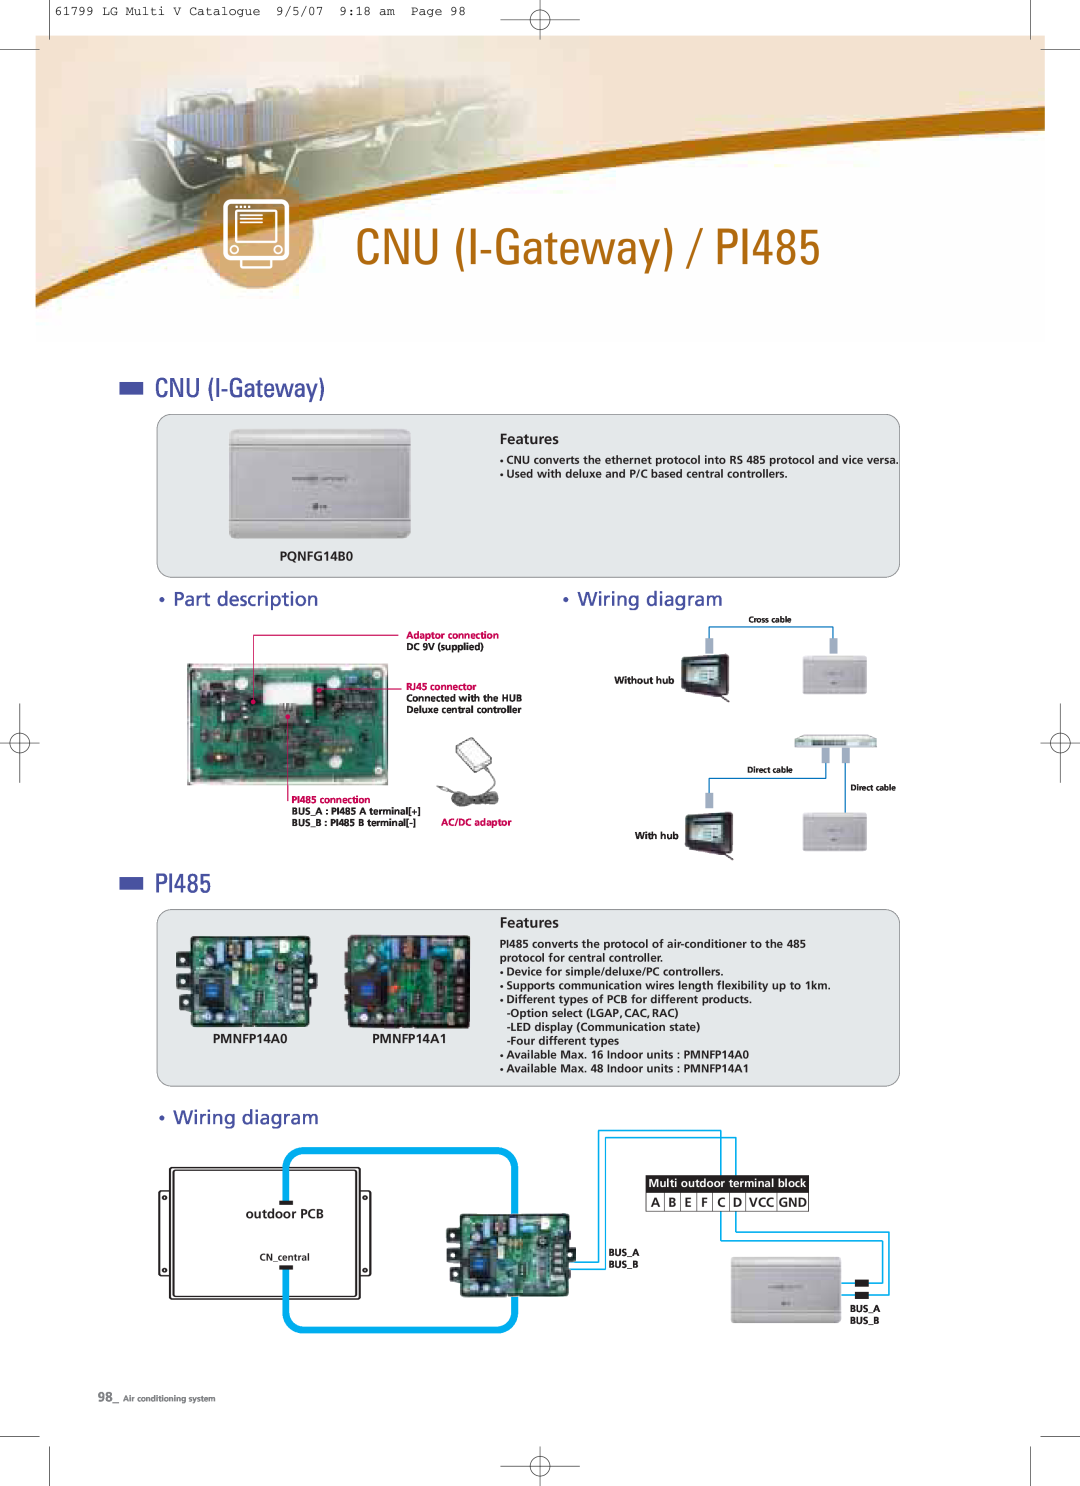 LG Electronics PRHR040 CNU I-Gateway / PI485, Part description, Wiring diagram, LG Multi V Catalogue 9/5/07 918 am Page 